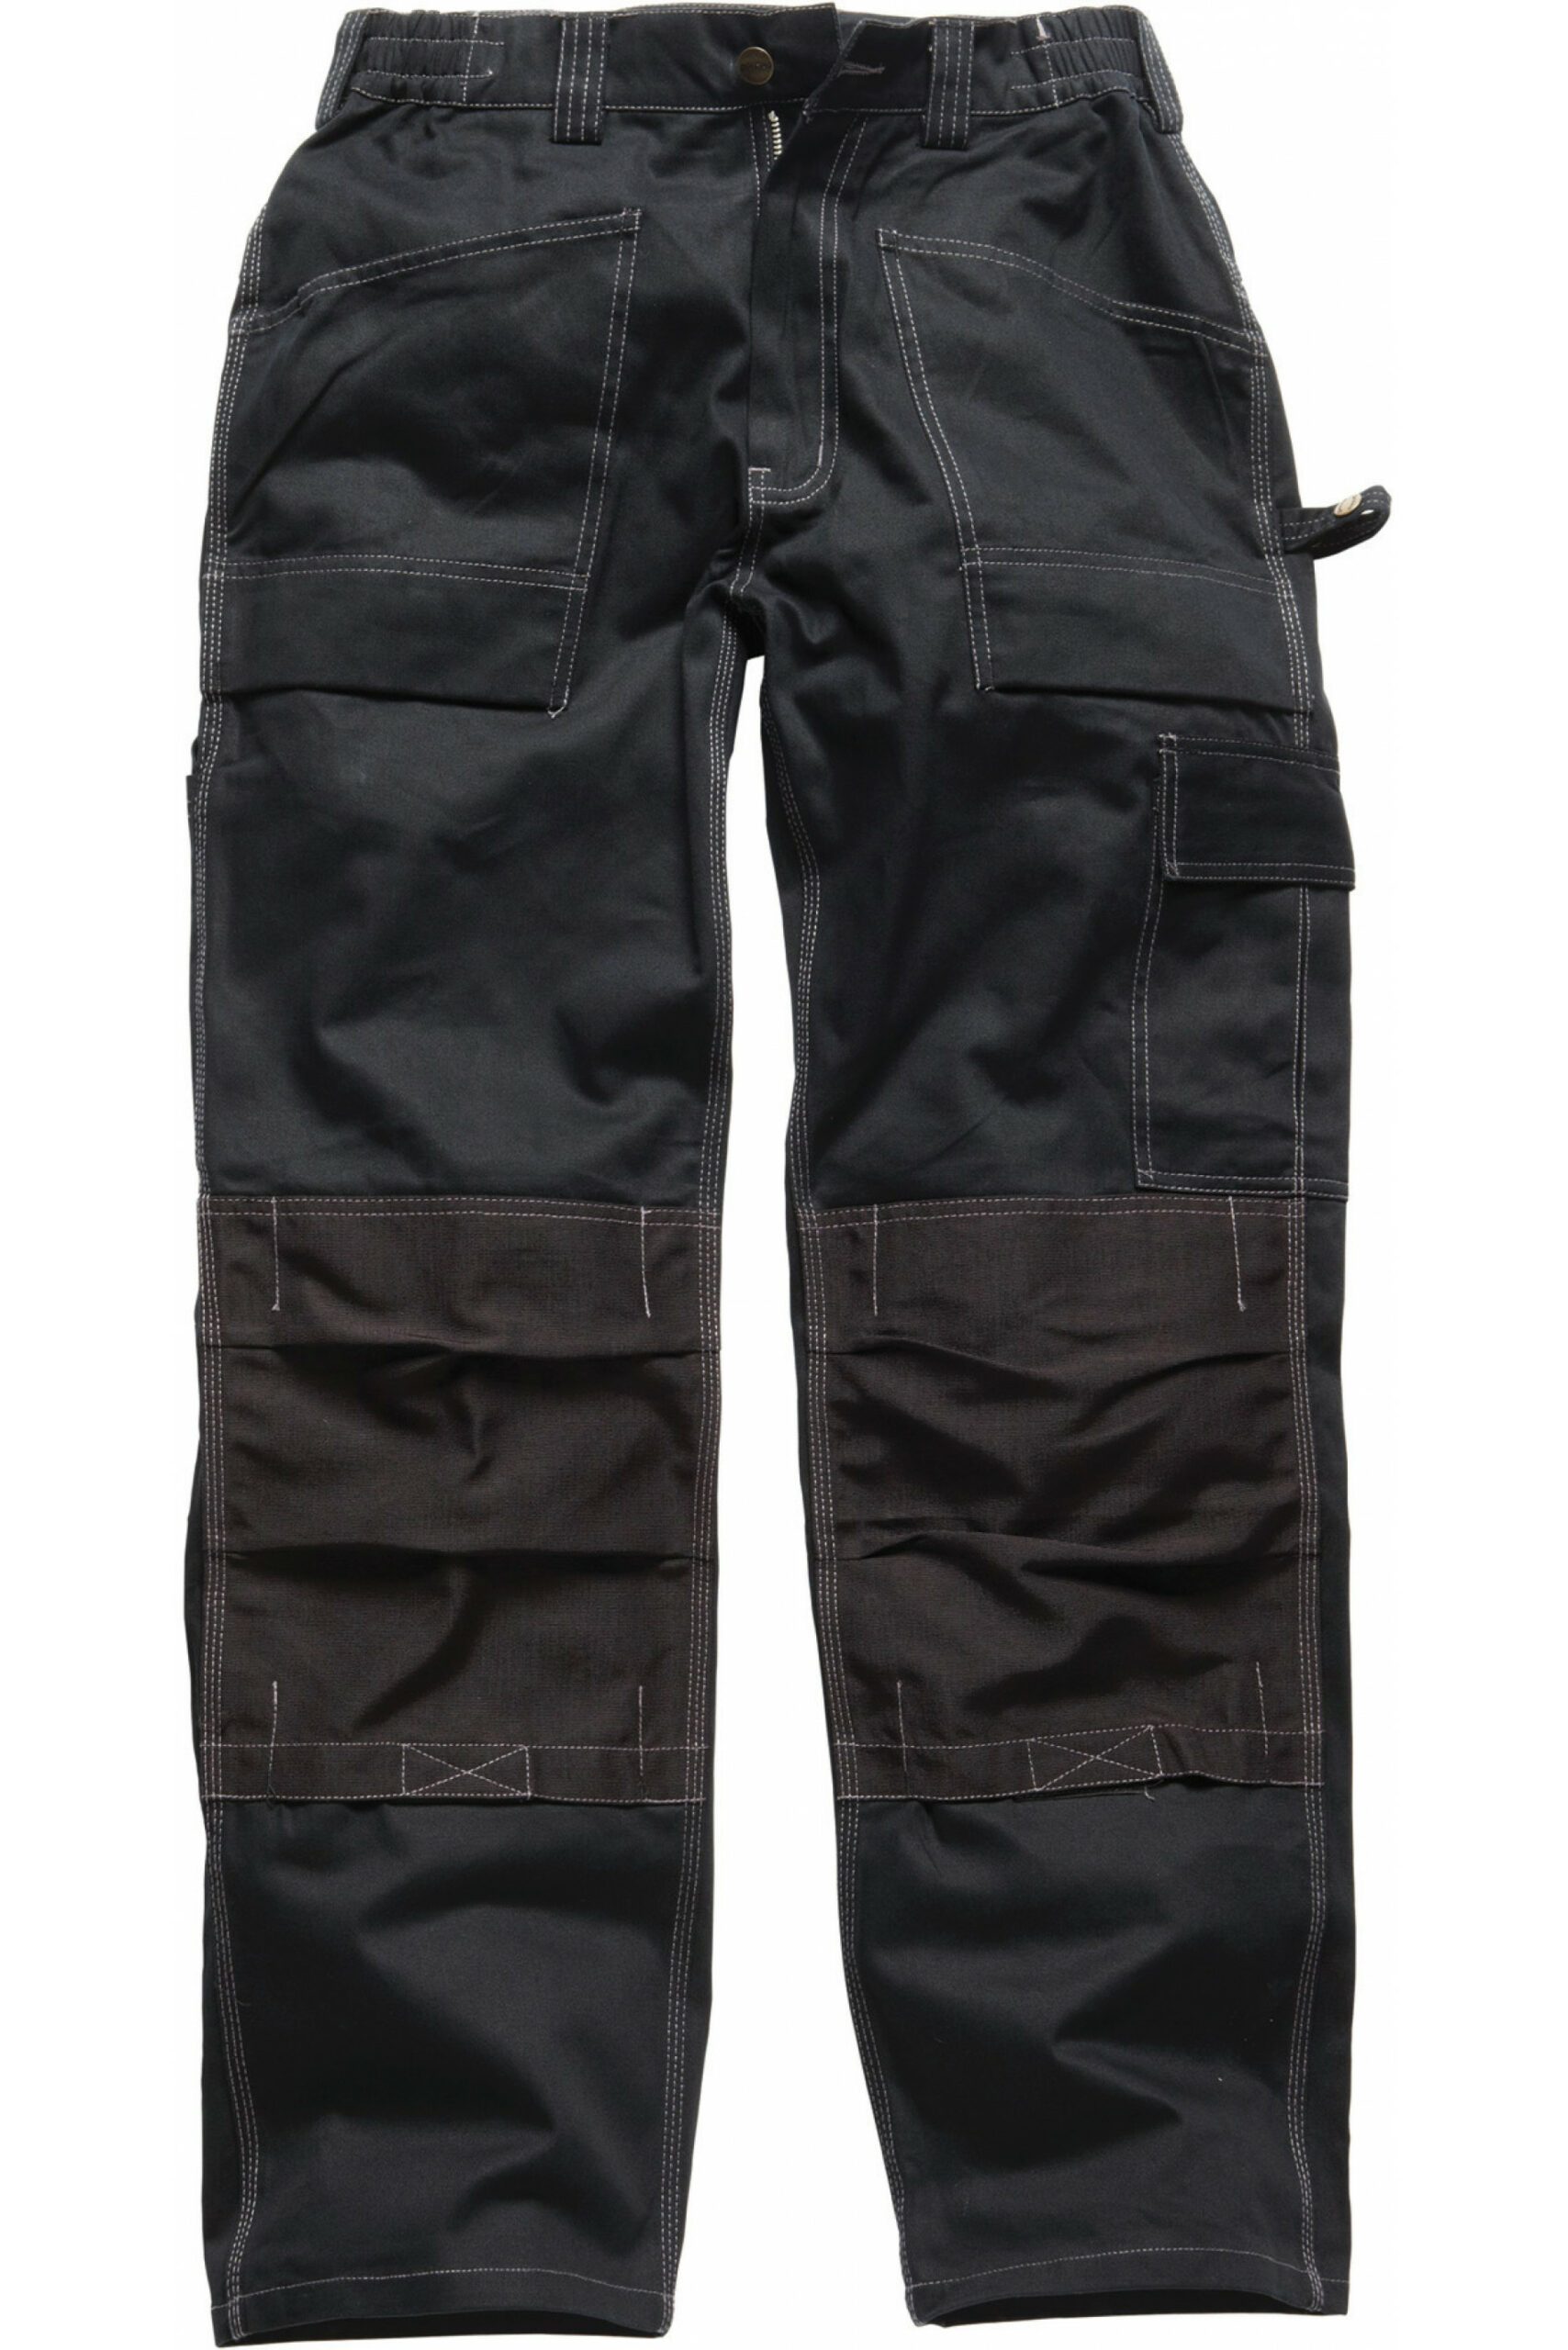 Pantalon genouillières Cordura noir